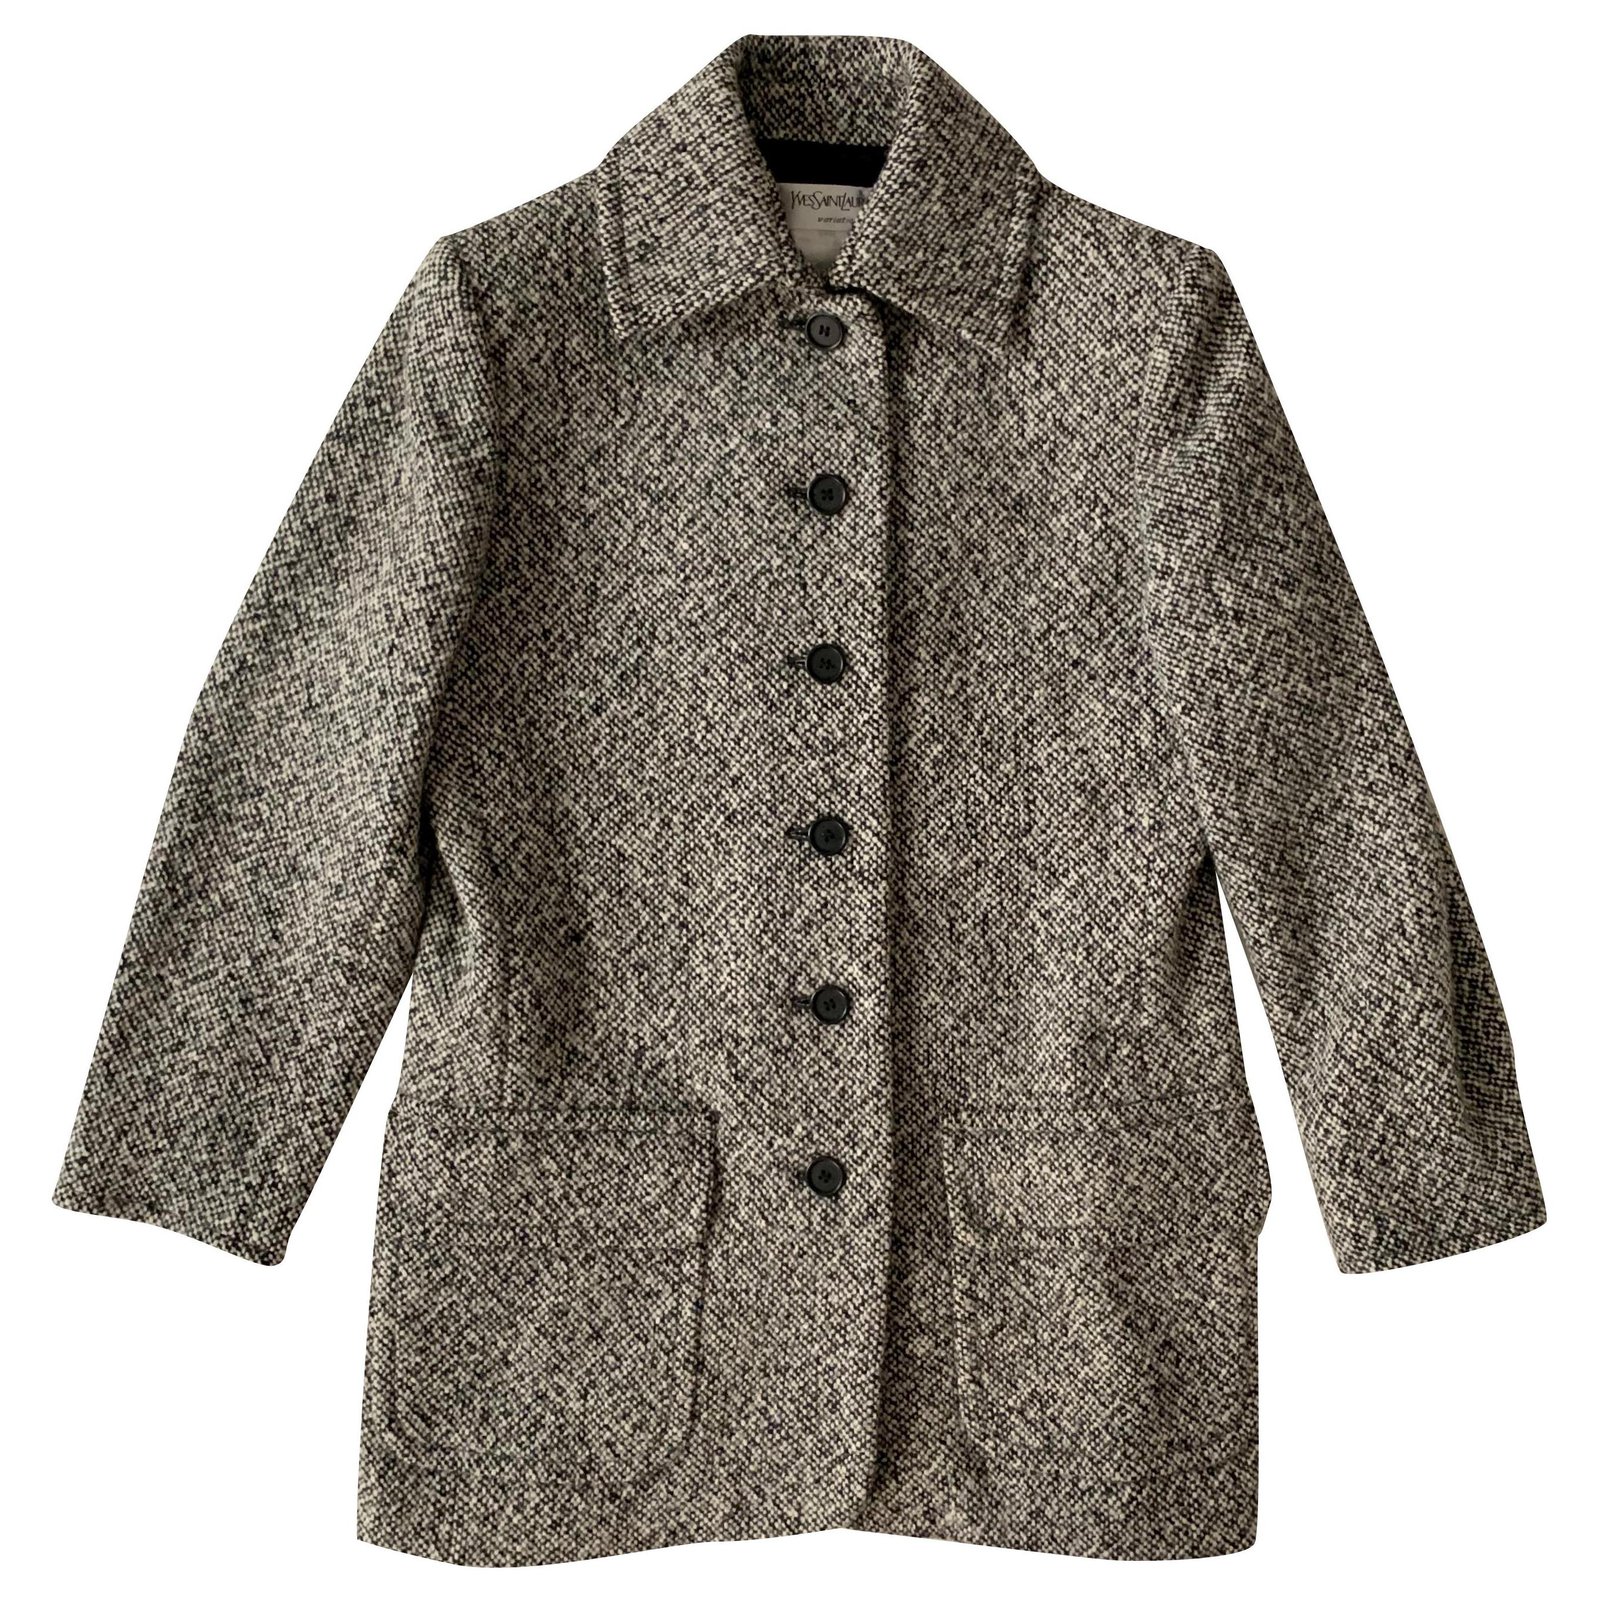 Yves Saint Laurent YSL Made in France Vintage Wool Jacket in Gray